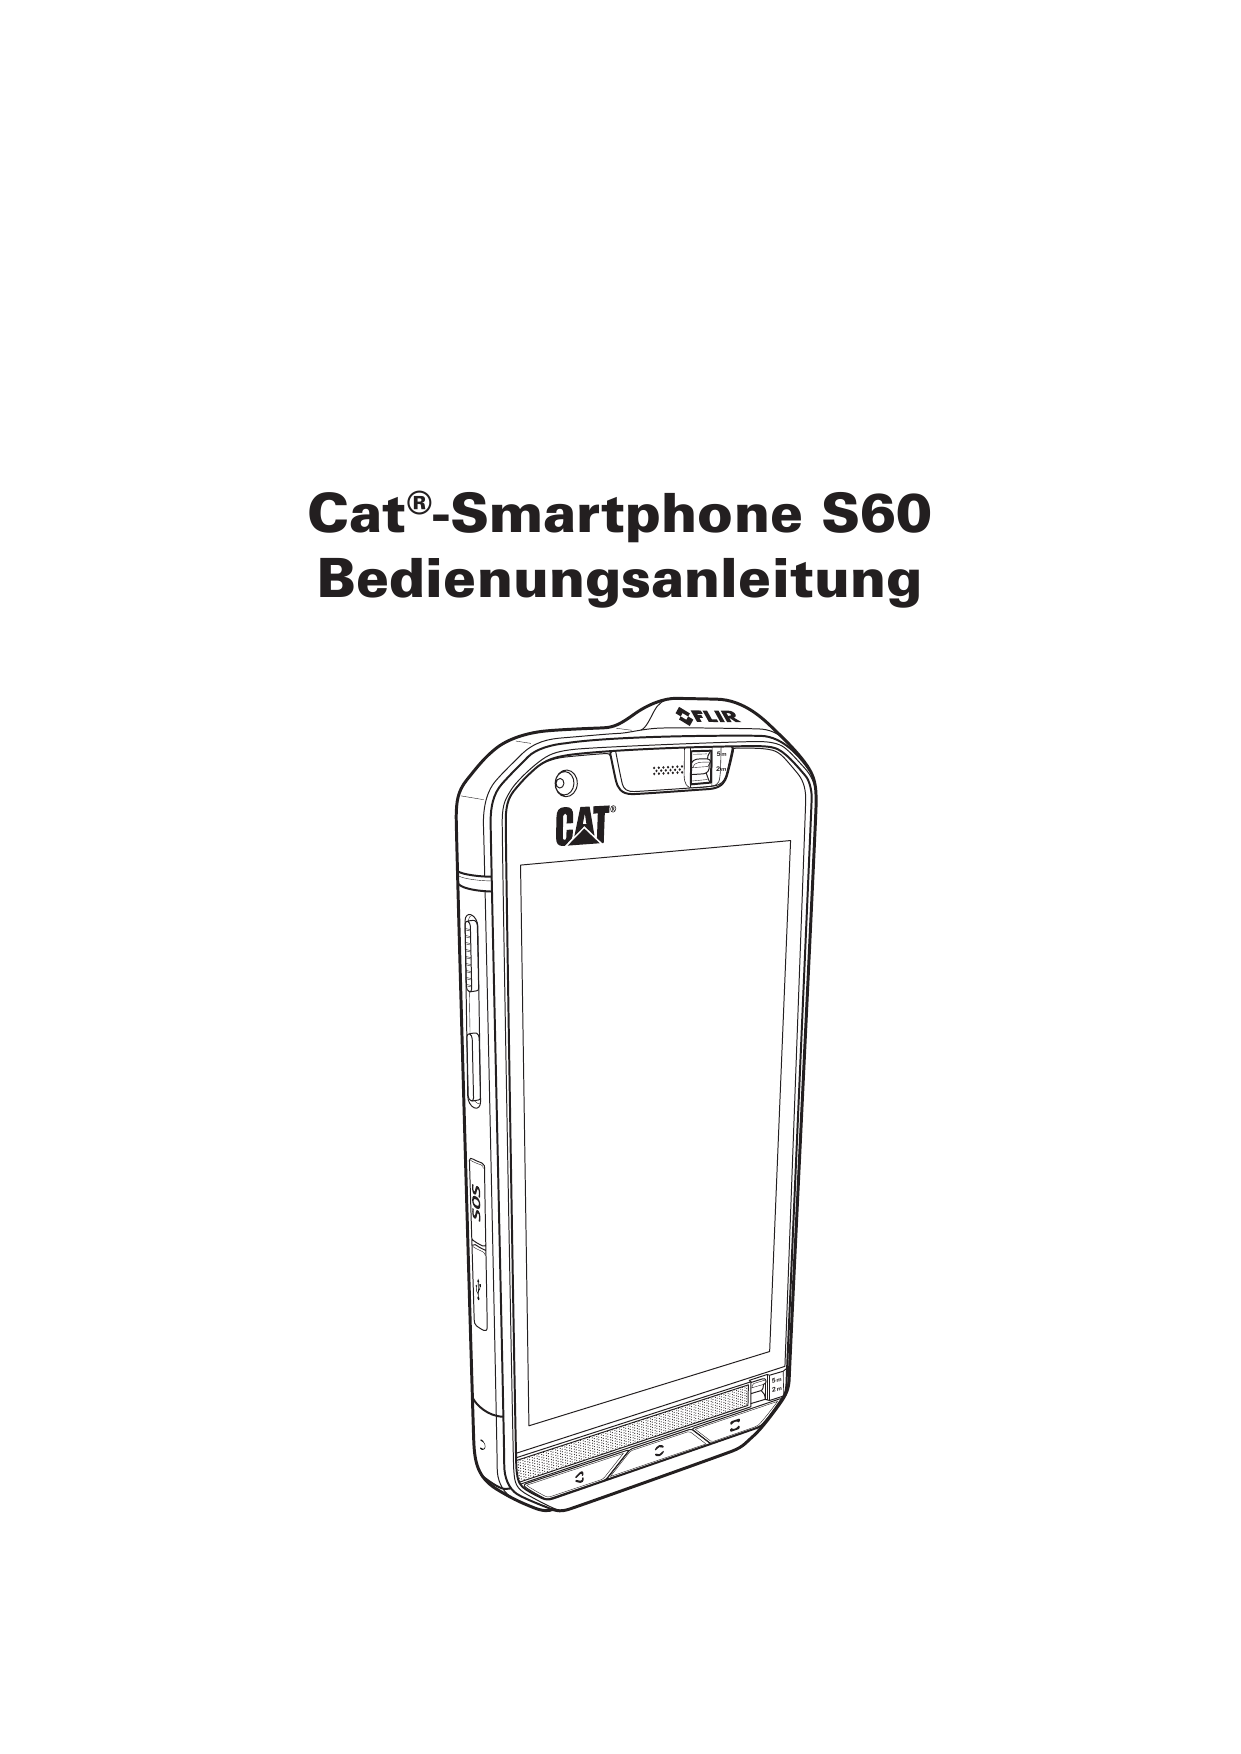 Cat®-Smartphone S60Bedienungsanleitung5m2m5m2m